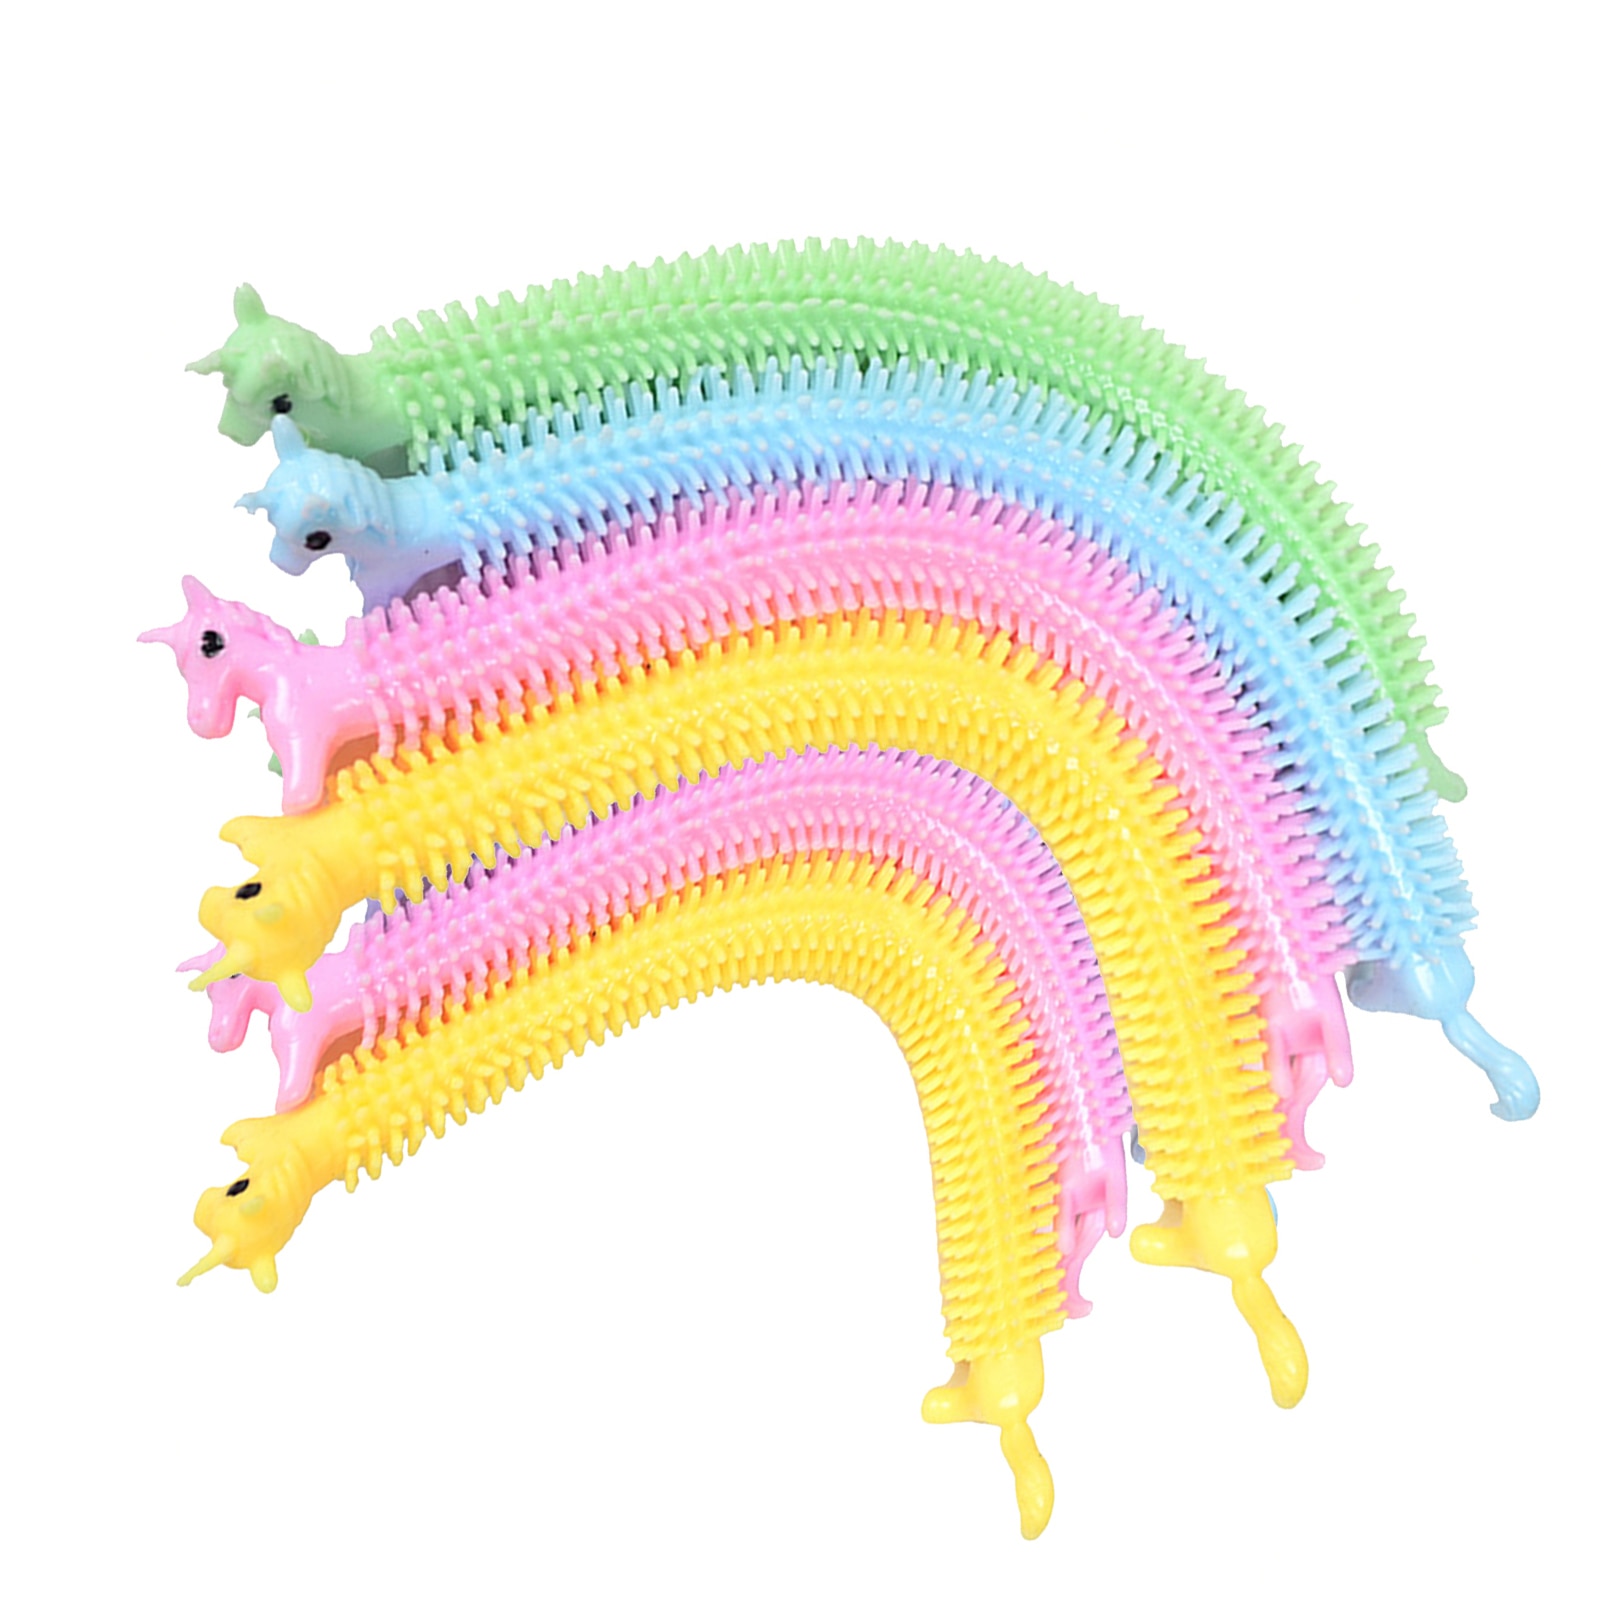 6 12PCS Fidget Sensory Toy Unicorn Elastic Rope Stretchy String Autism Needs Special Stress Reliever Toys - Simple Dimple Fidget